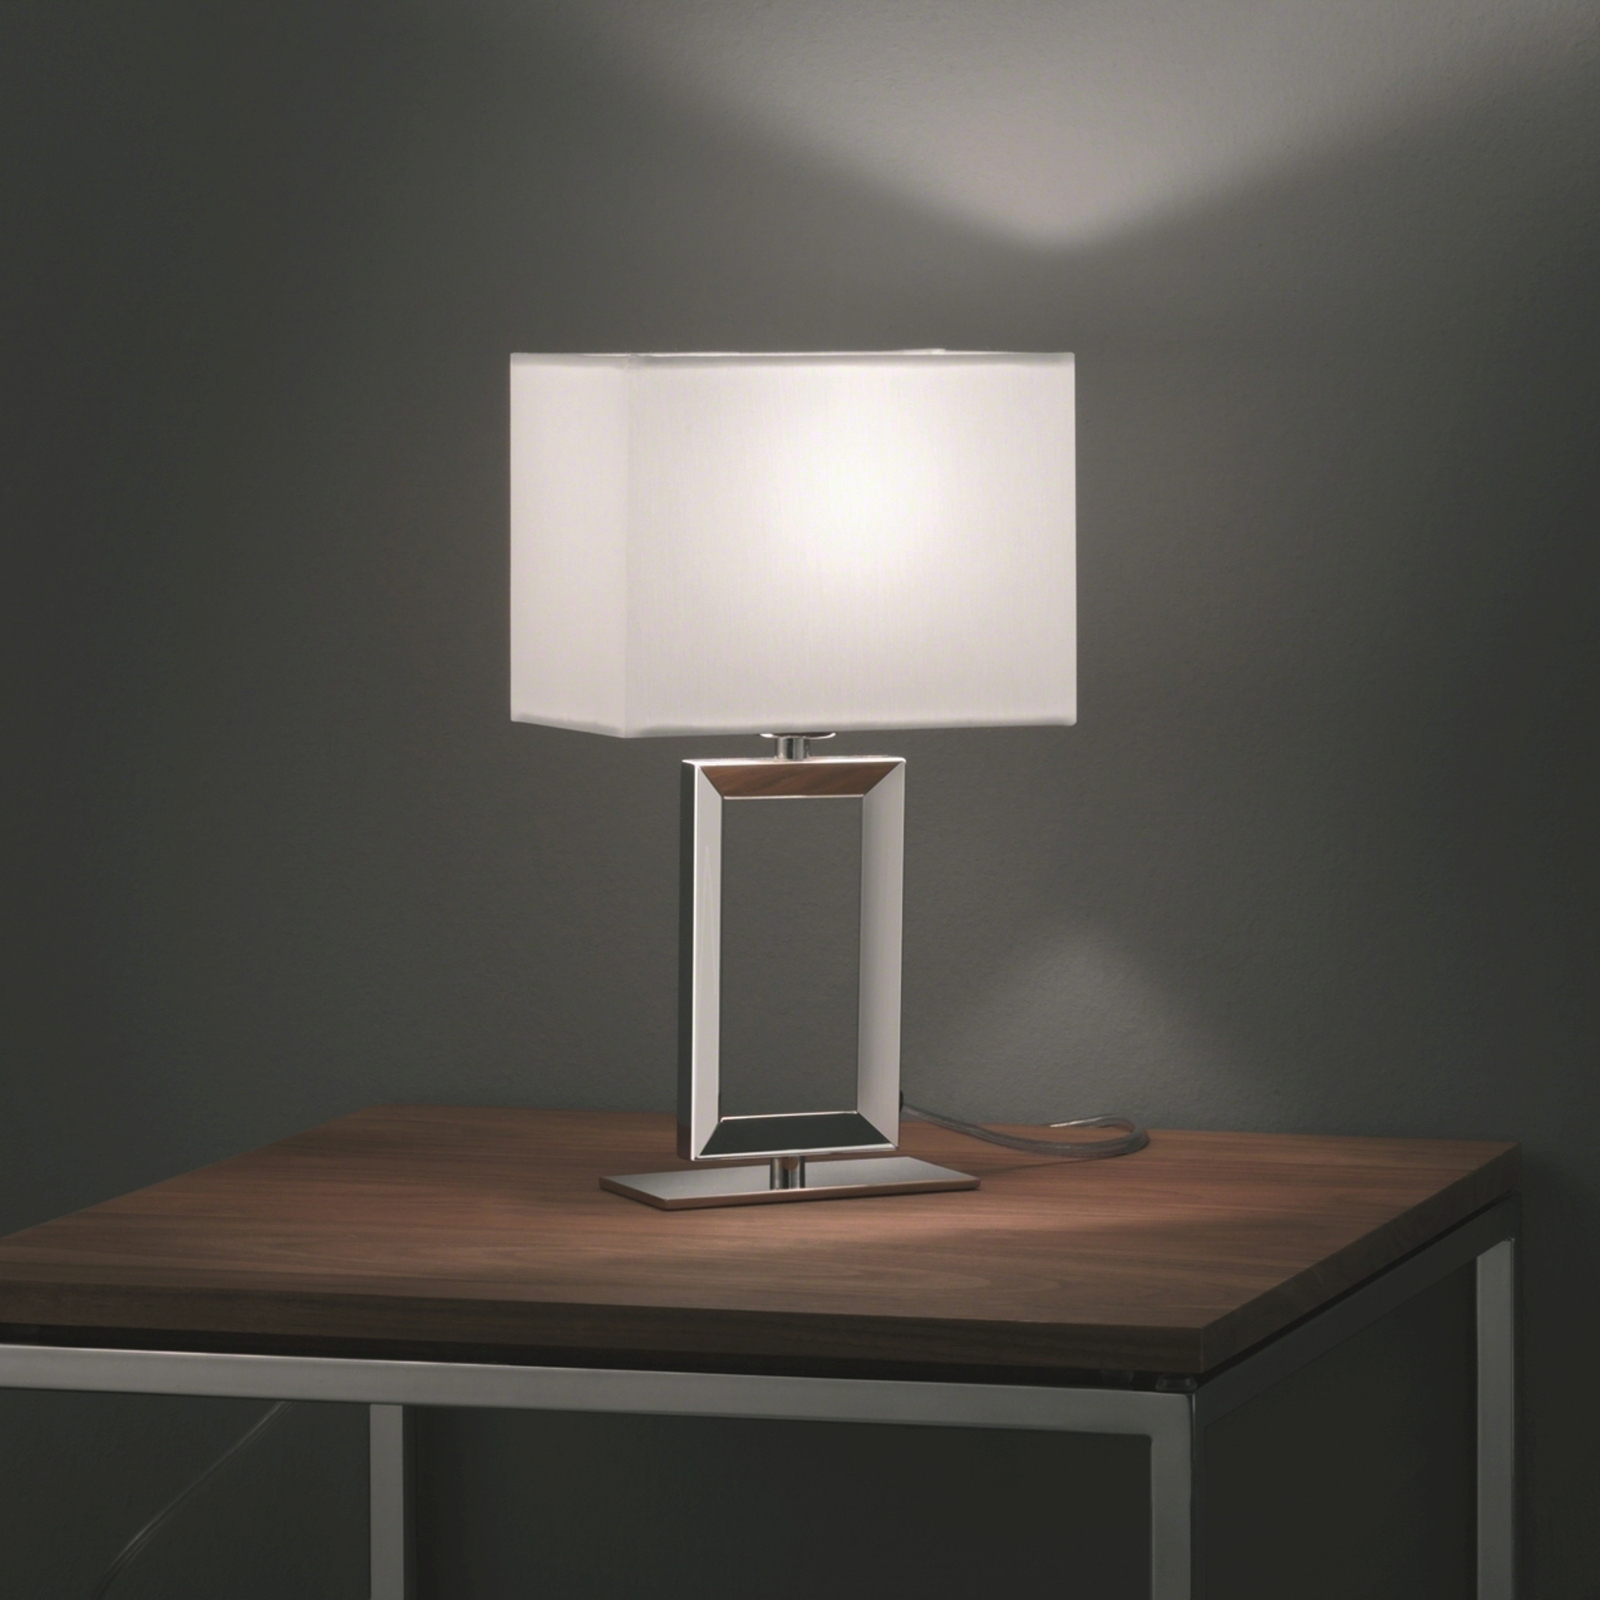 Helestra Enna 2 fabric table lamp, 30 cm high